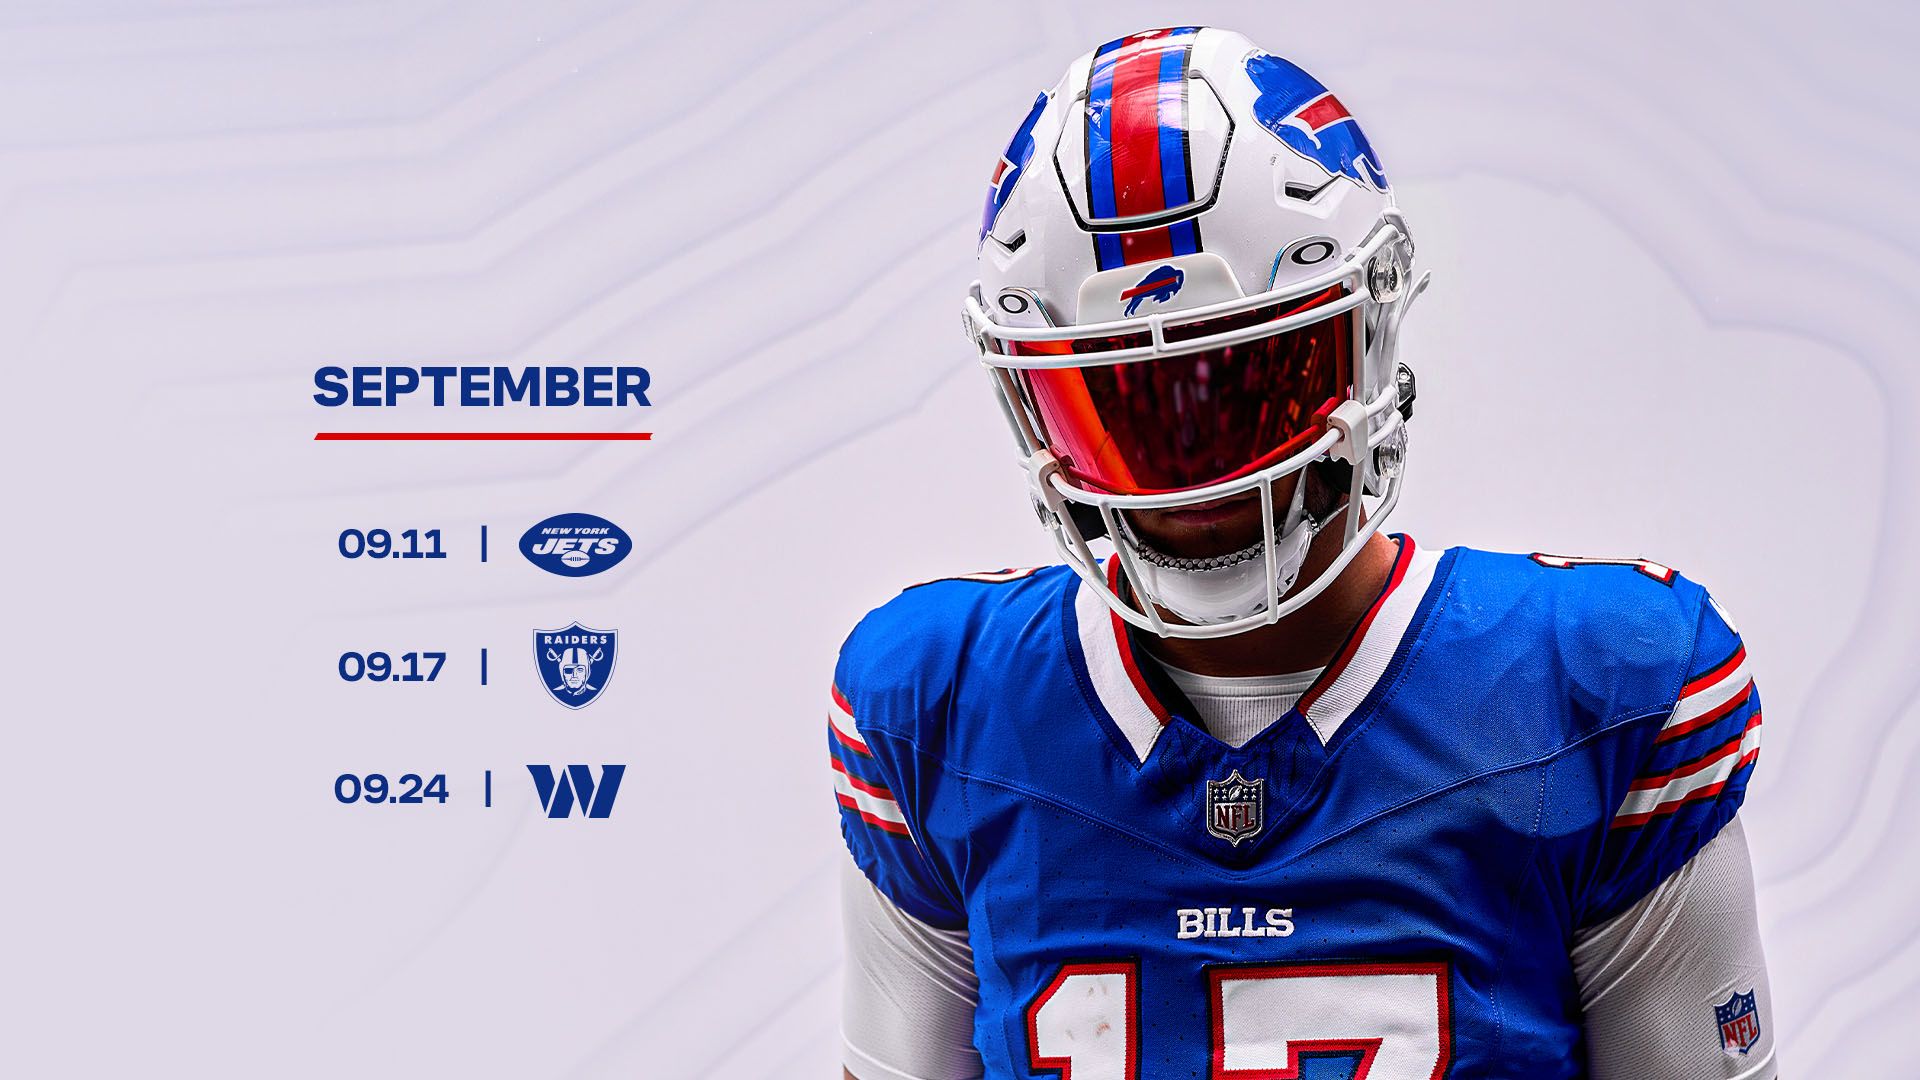 Buffalo Bills on X: New schedule. New lockscreen. 